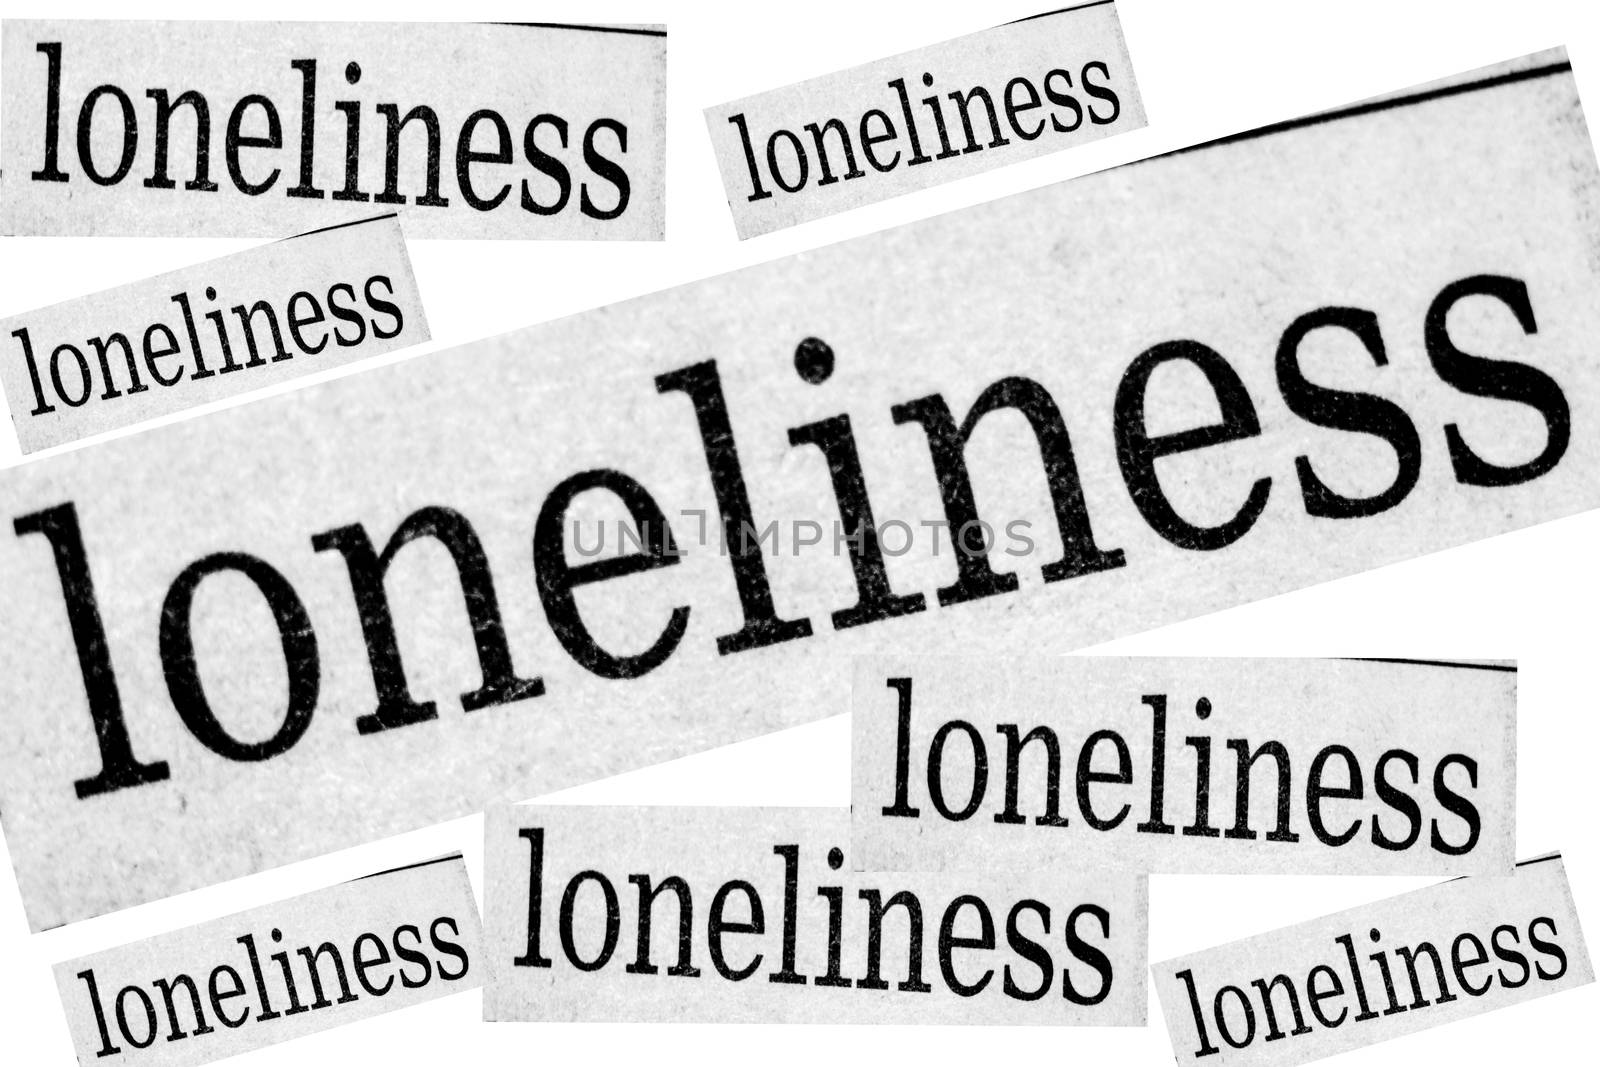 Distressed newspaper headline reading of mass loneliness by paddythegolfer